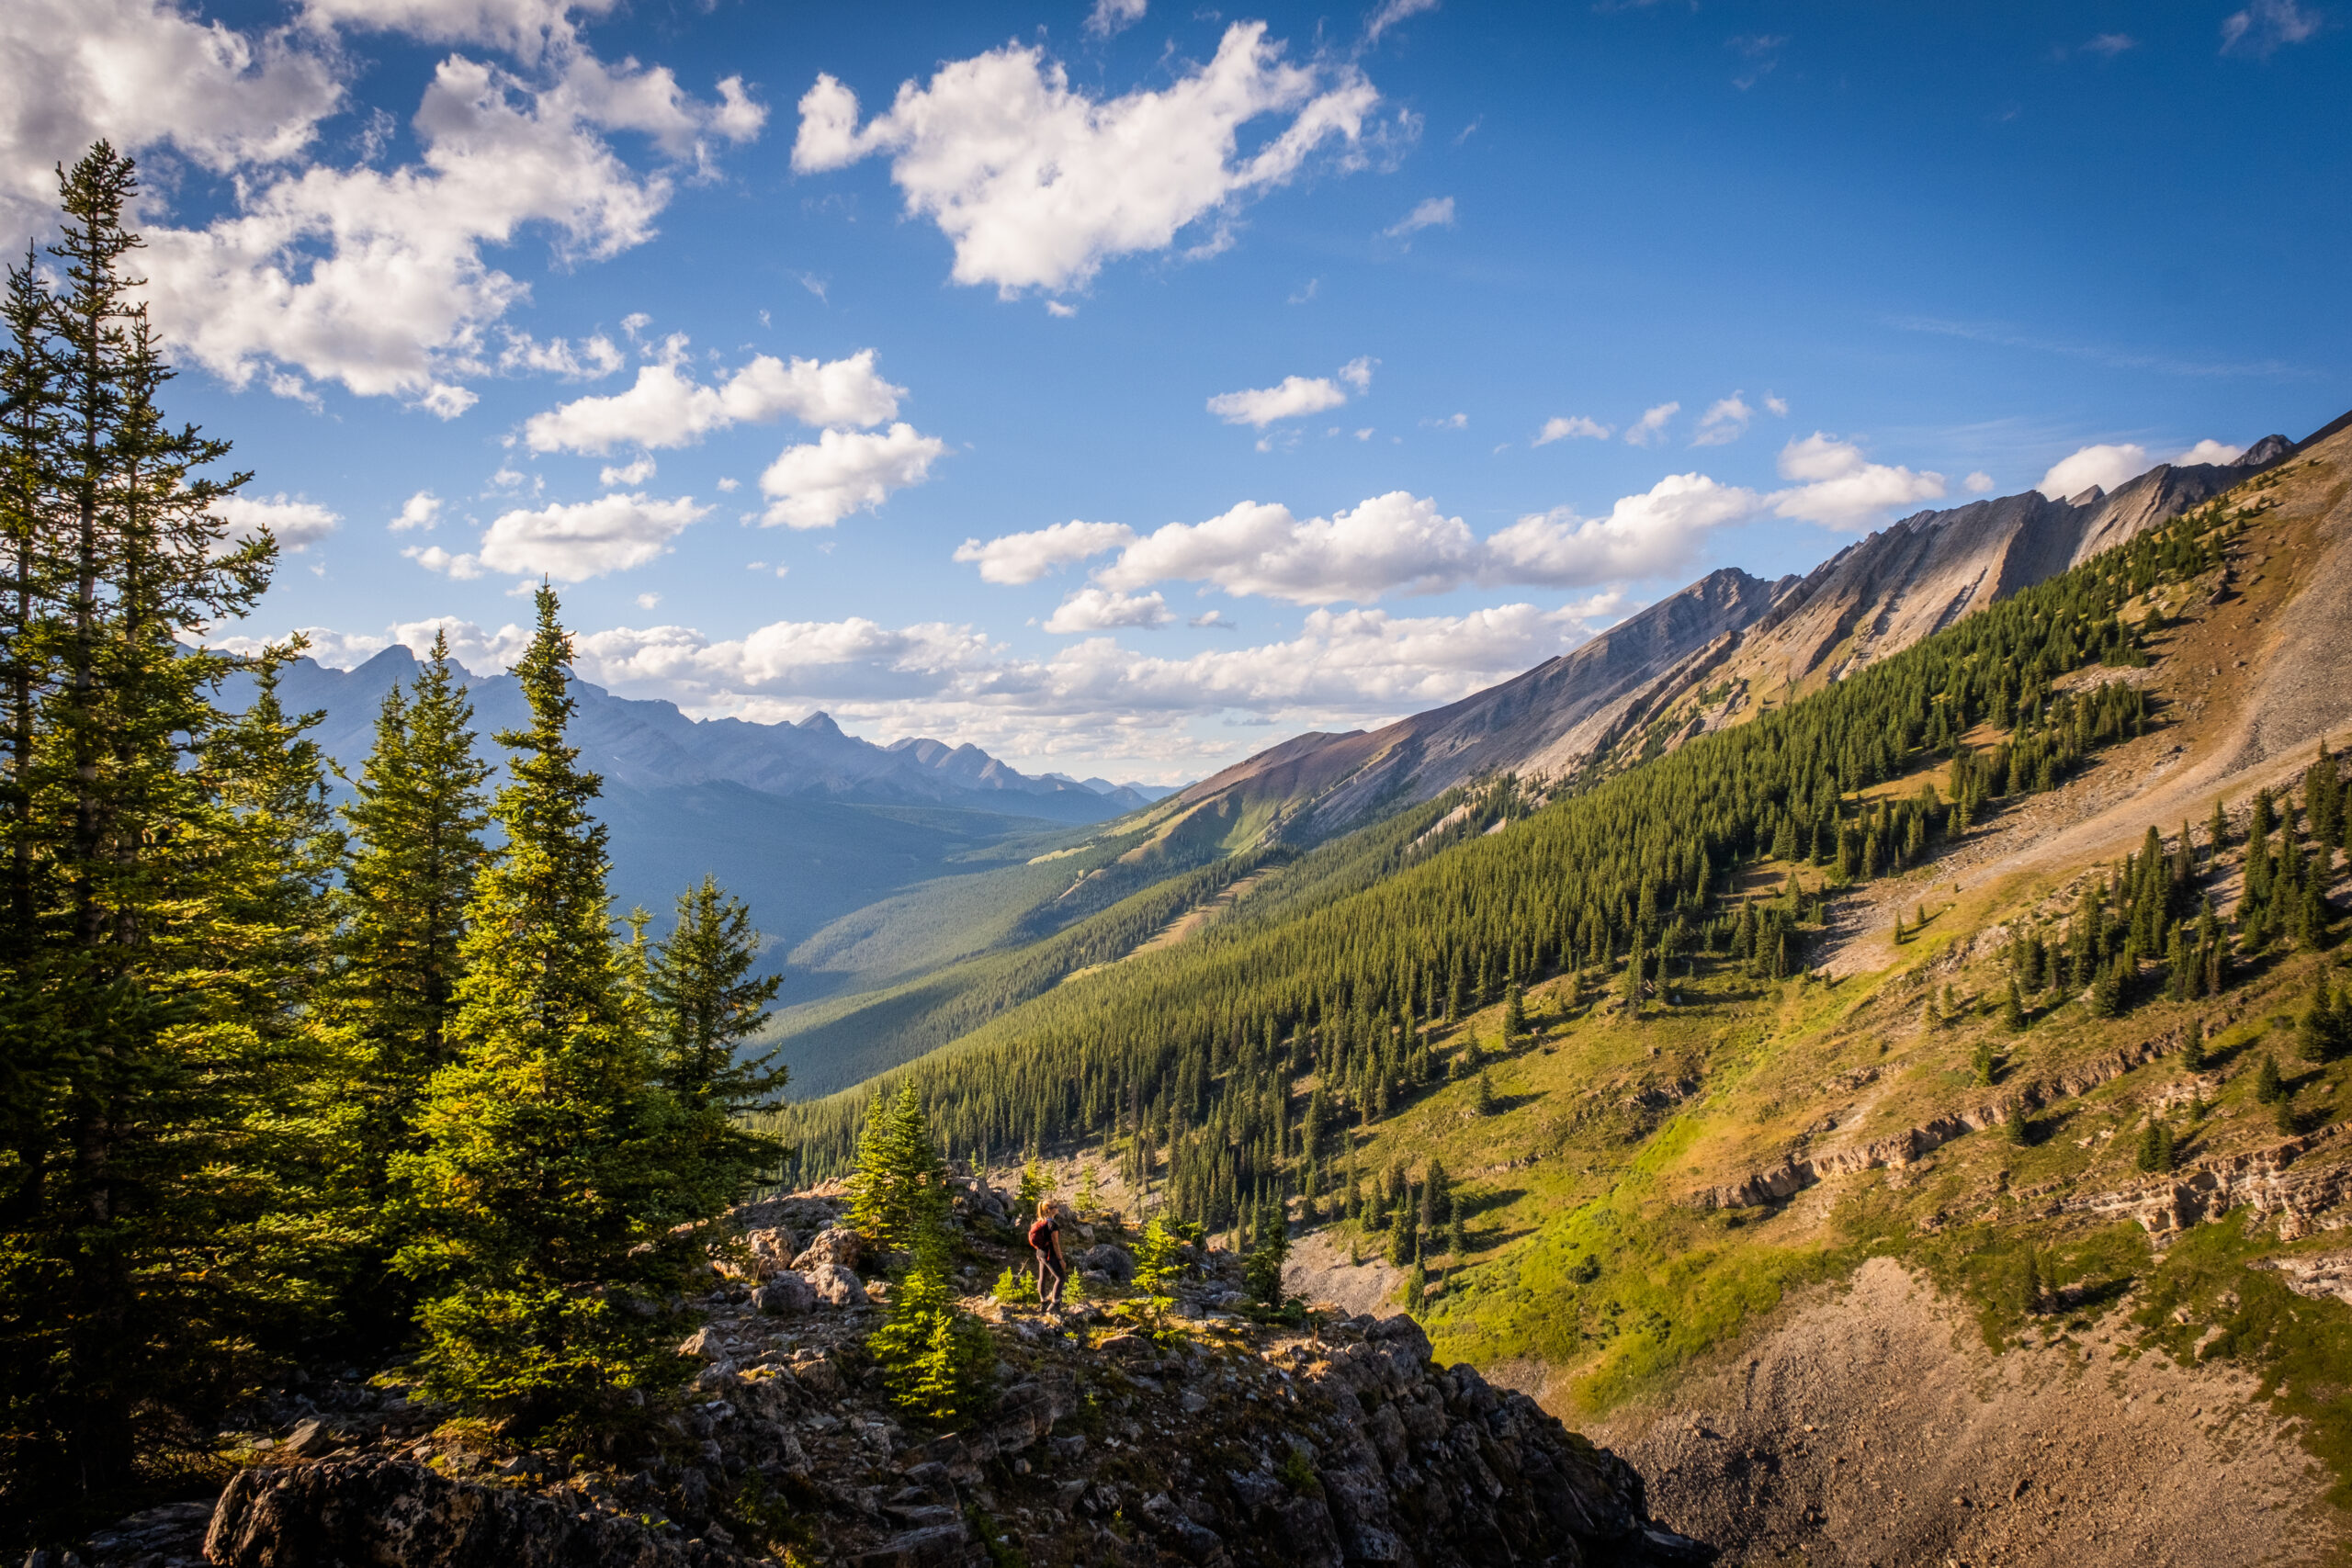 Cascade Mountain Hike Detailed Guide (+ Photos) - The Banff Blog